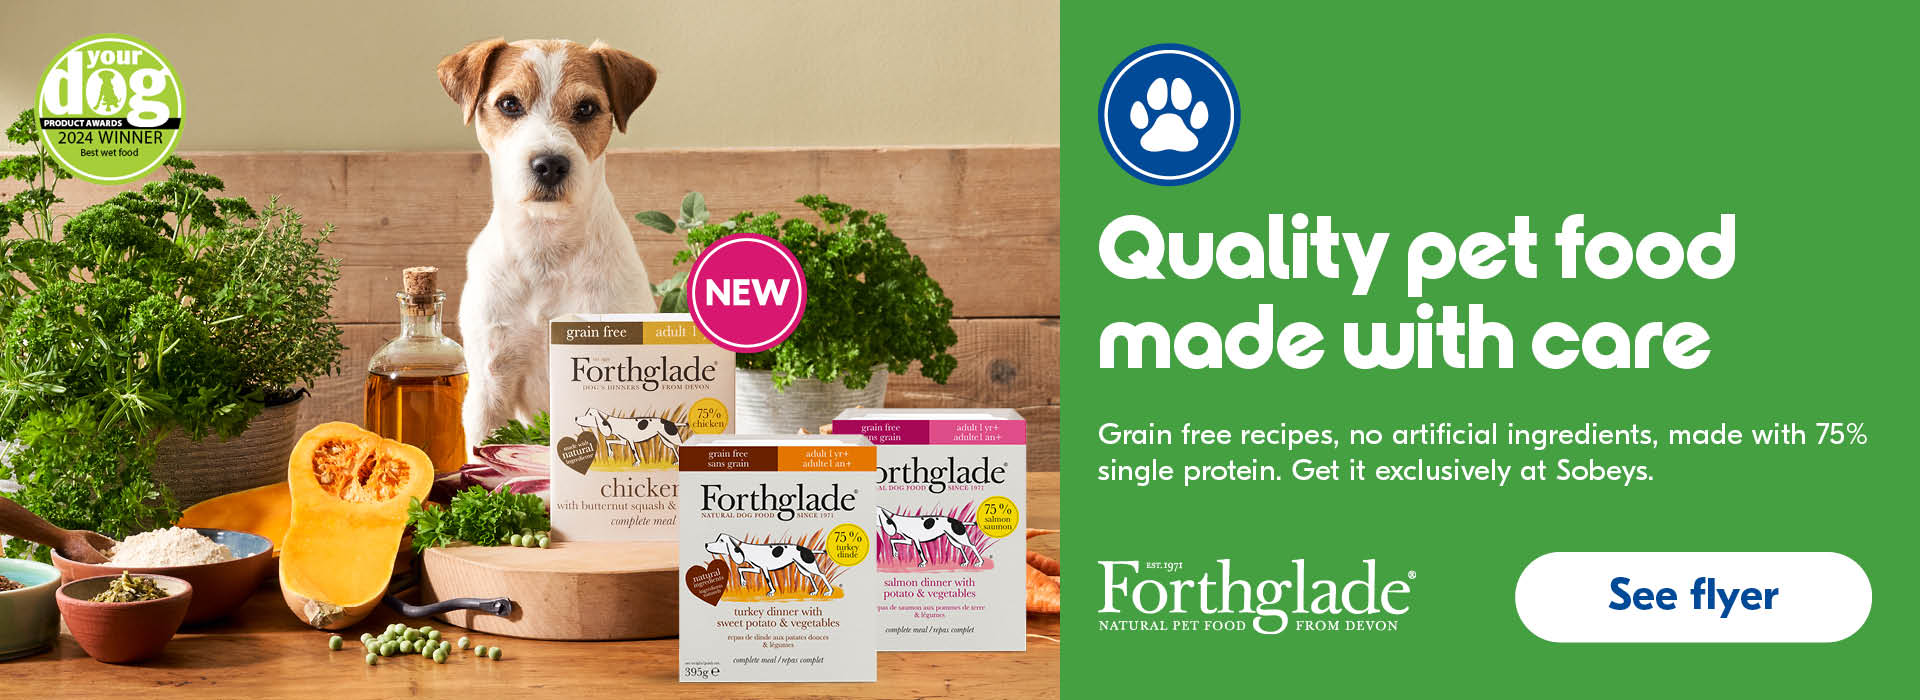 Forthglade Premium Dog Food